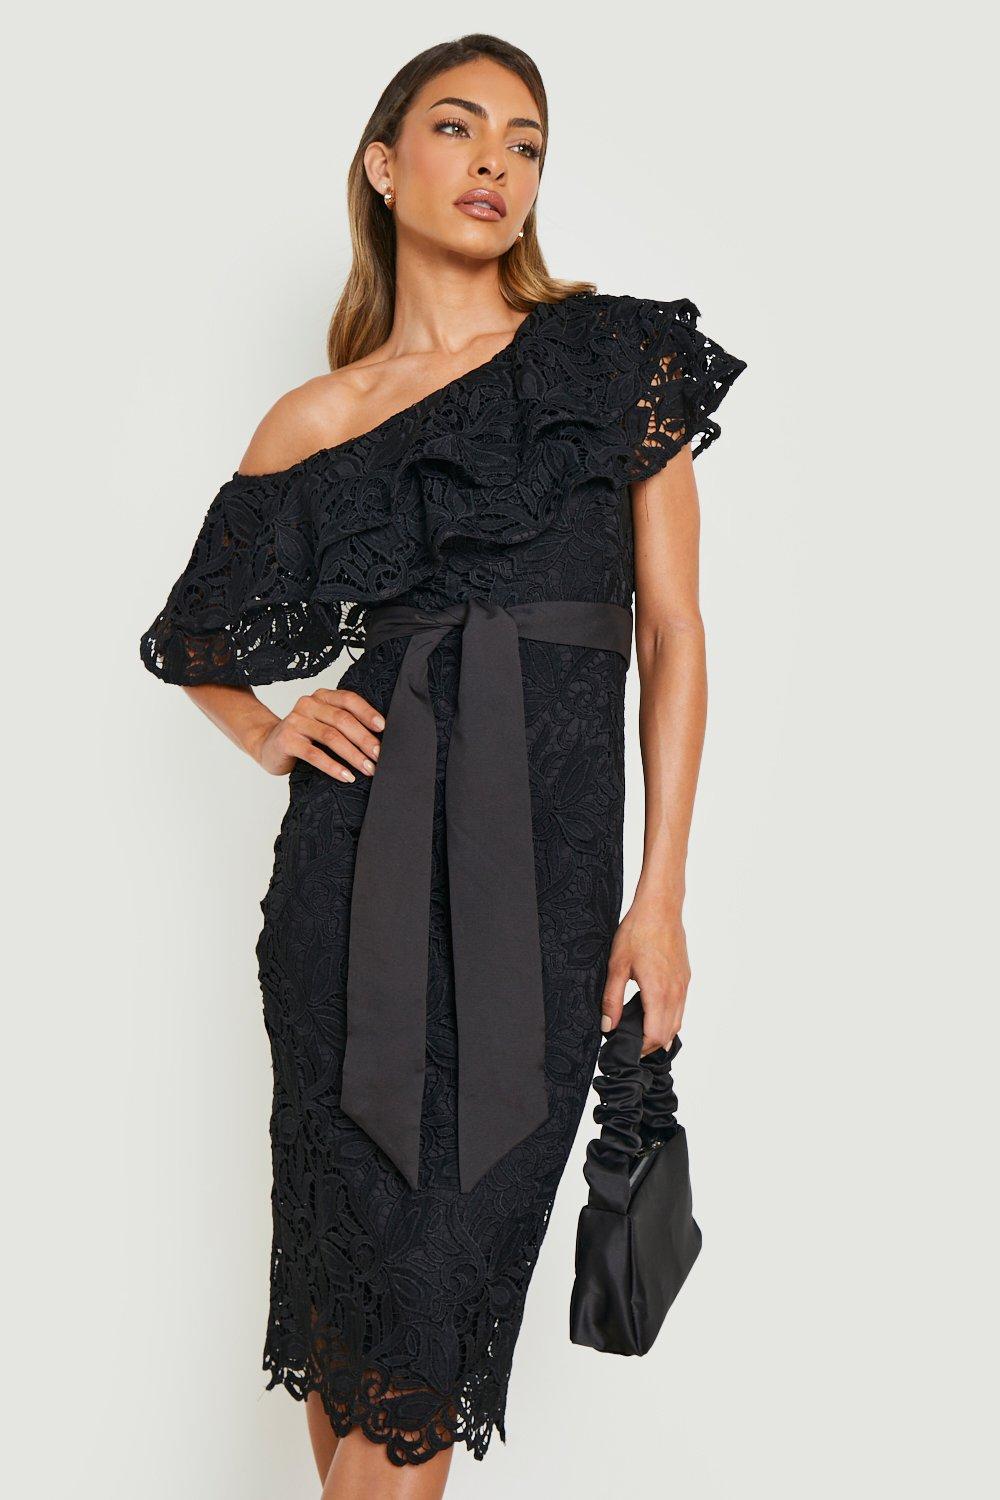 Vintage Style Dresses | Vintage Inspired Dresses Womens Crochet Lace Asymetric Frill Midi Dress - Black - 14 $38.00 AT vintagedancer.com